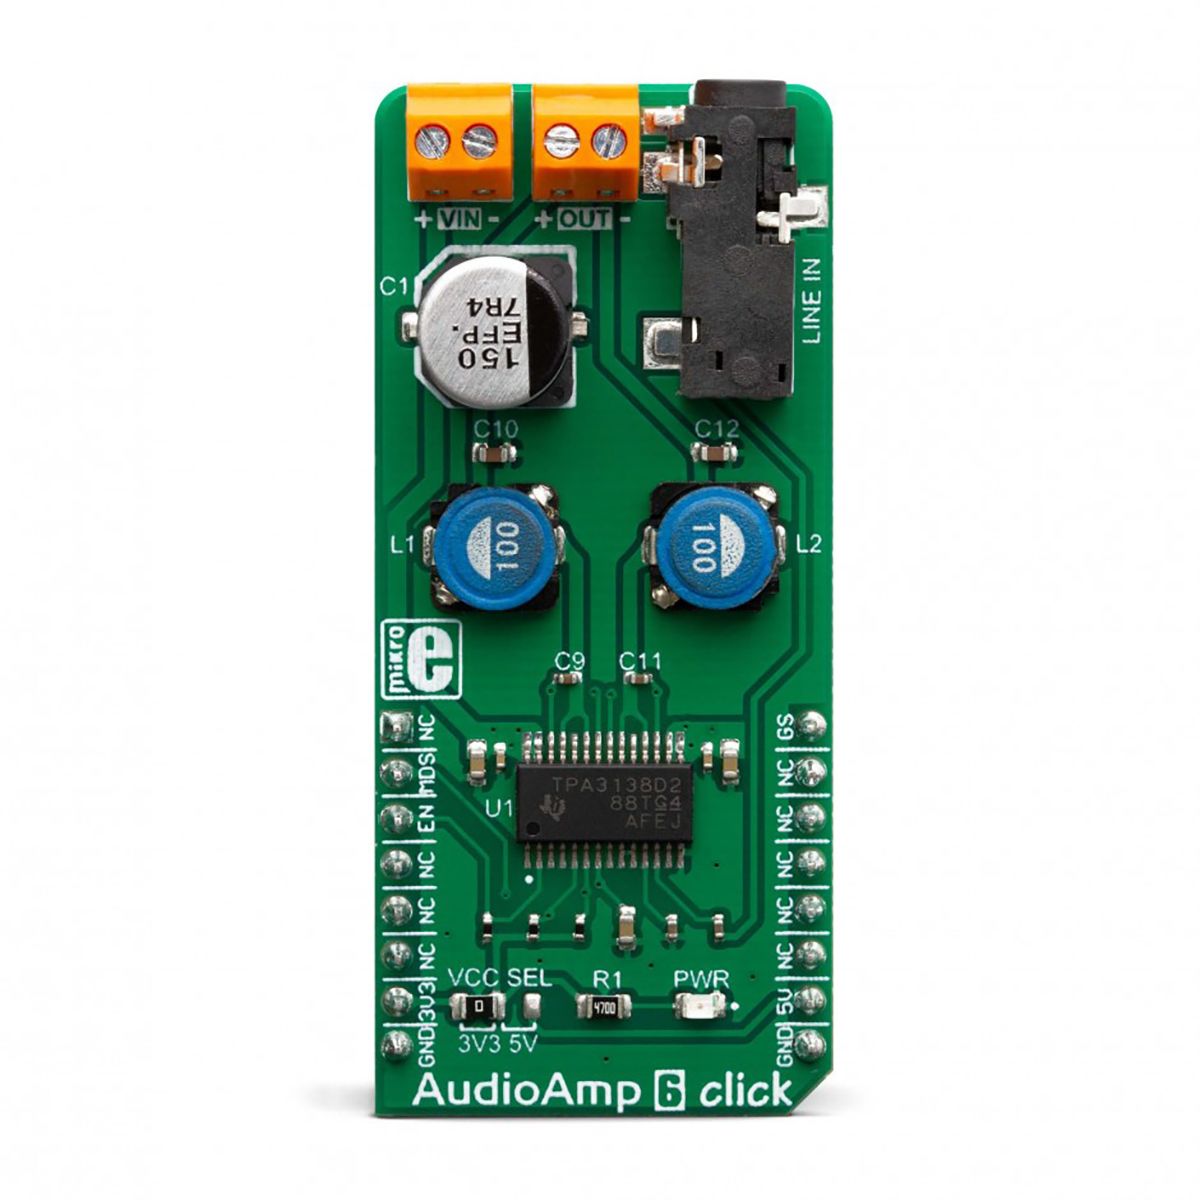 MikroElektronika MIKROE-3448, AudioAmp 6 Click Audio Amplifier for TPA3138D2